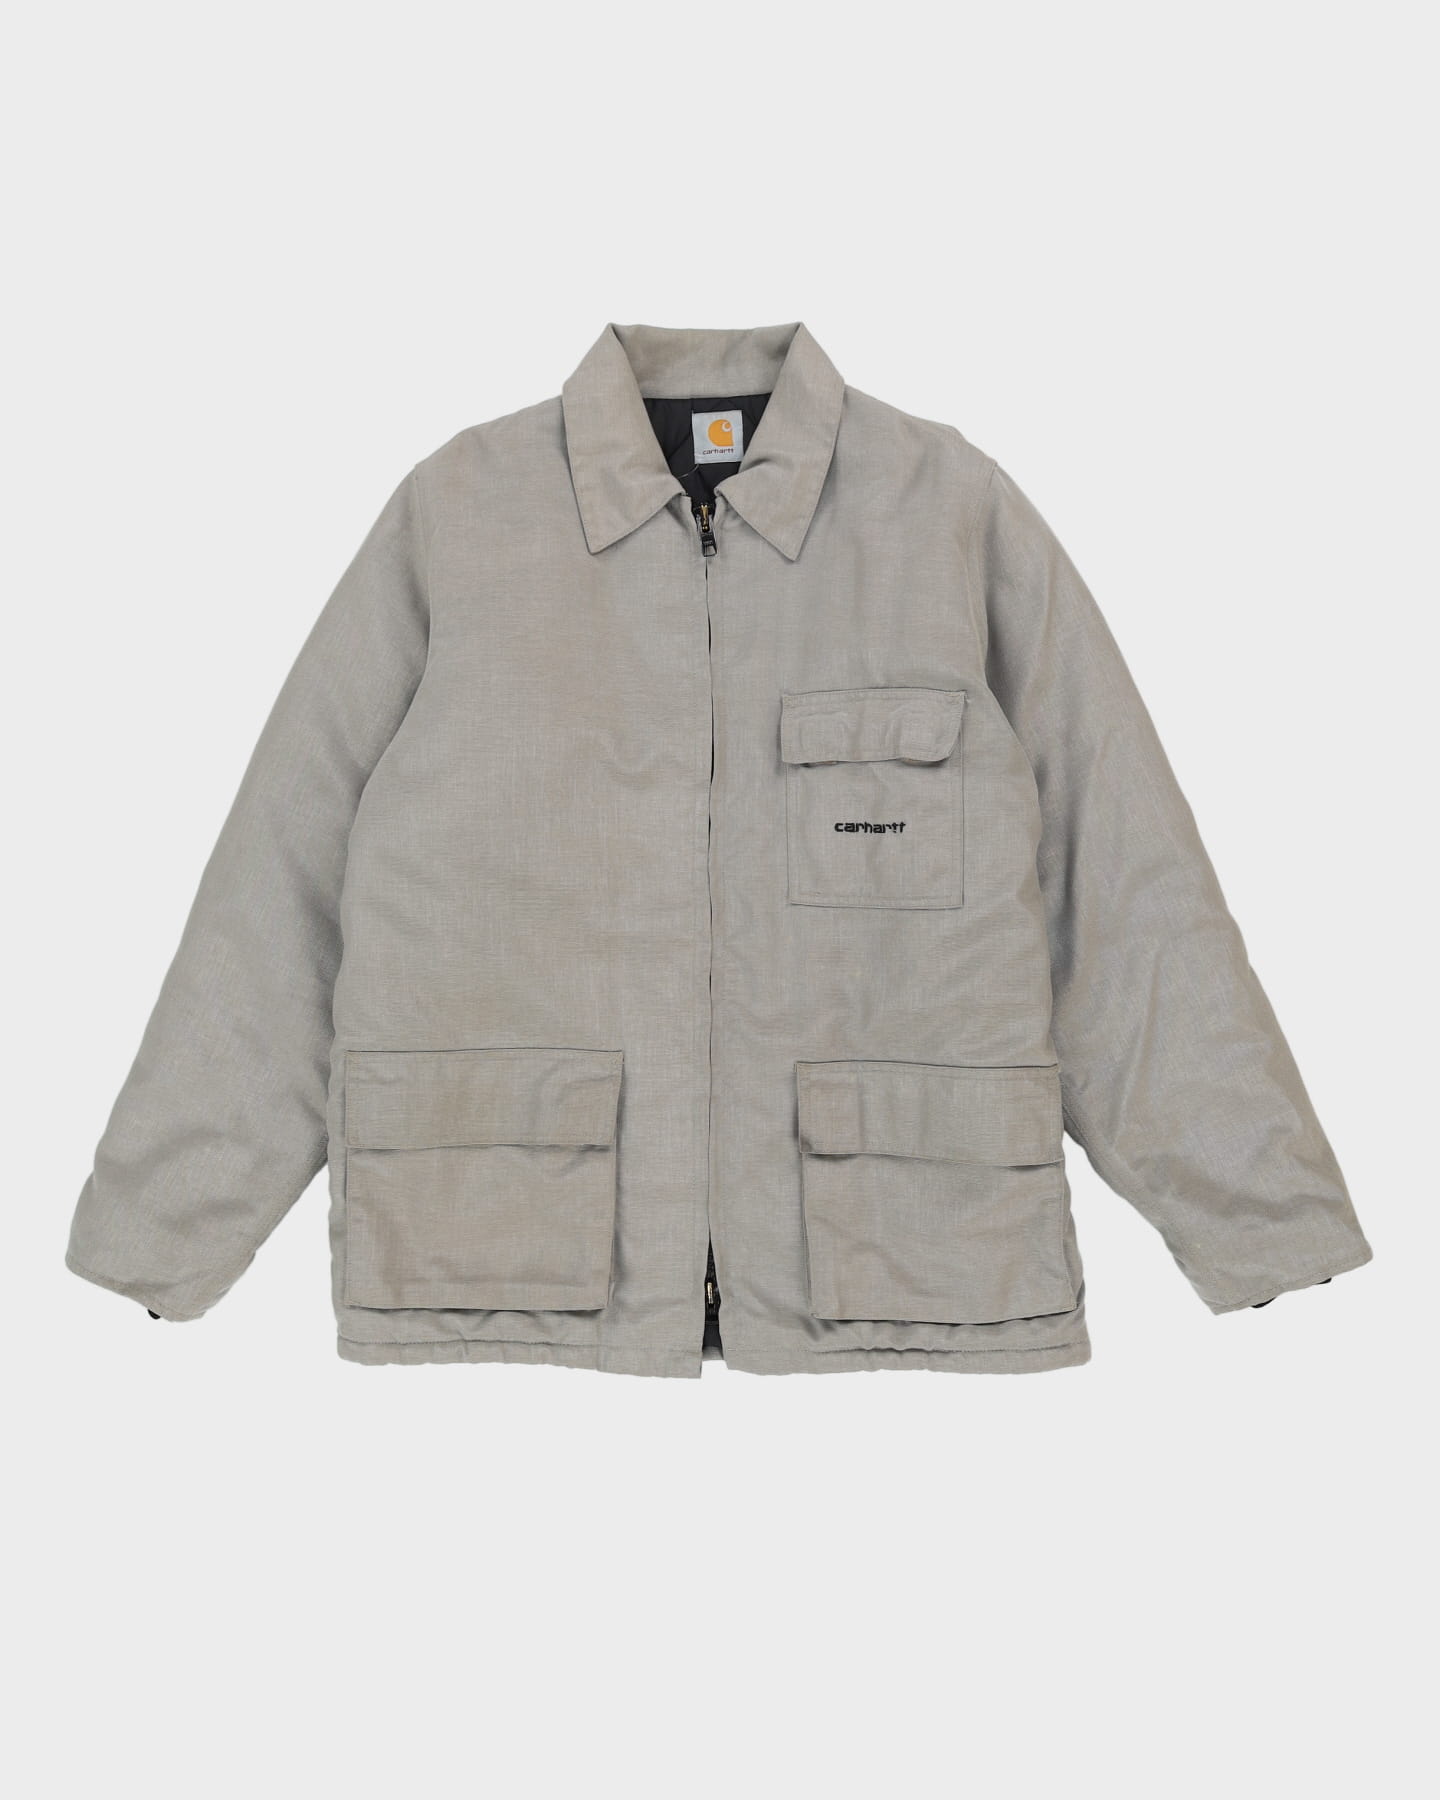 Carhartt Grey Padded Full-Zip Jacket - XL